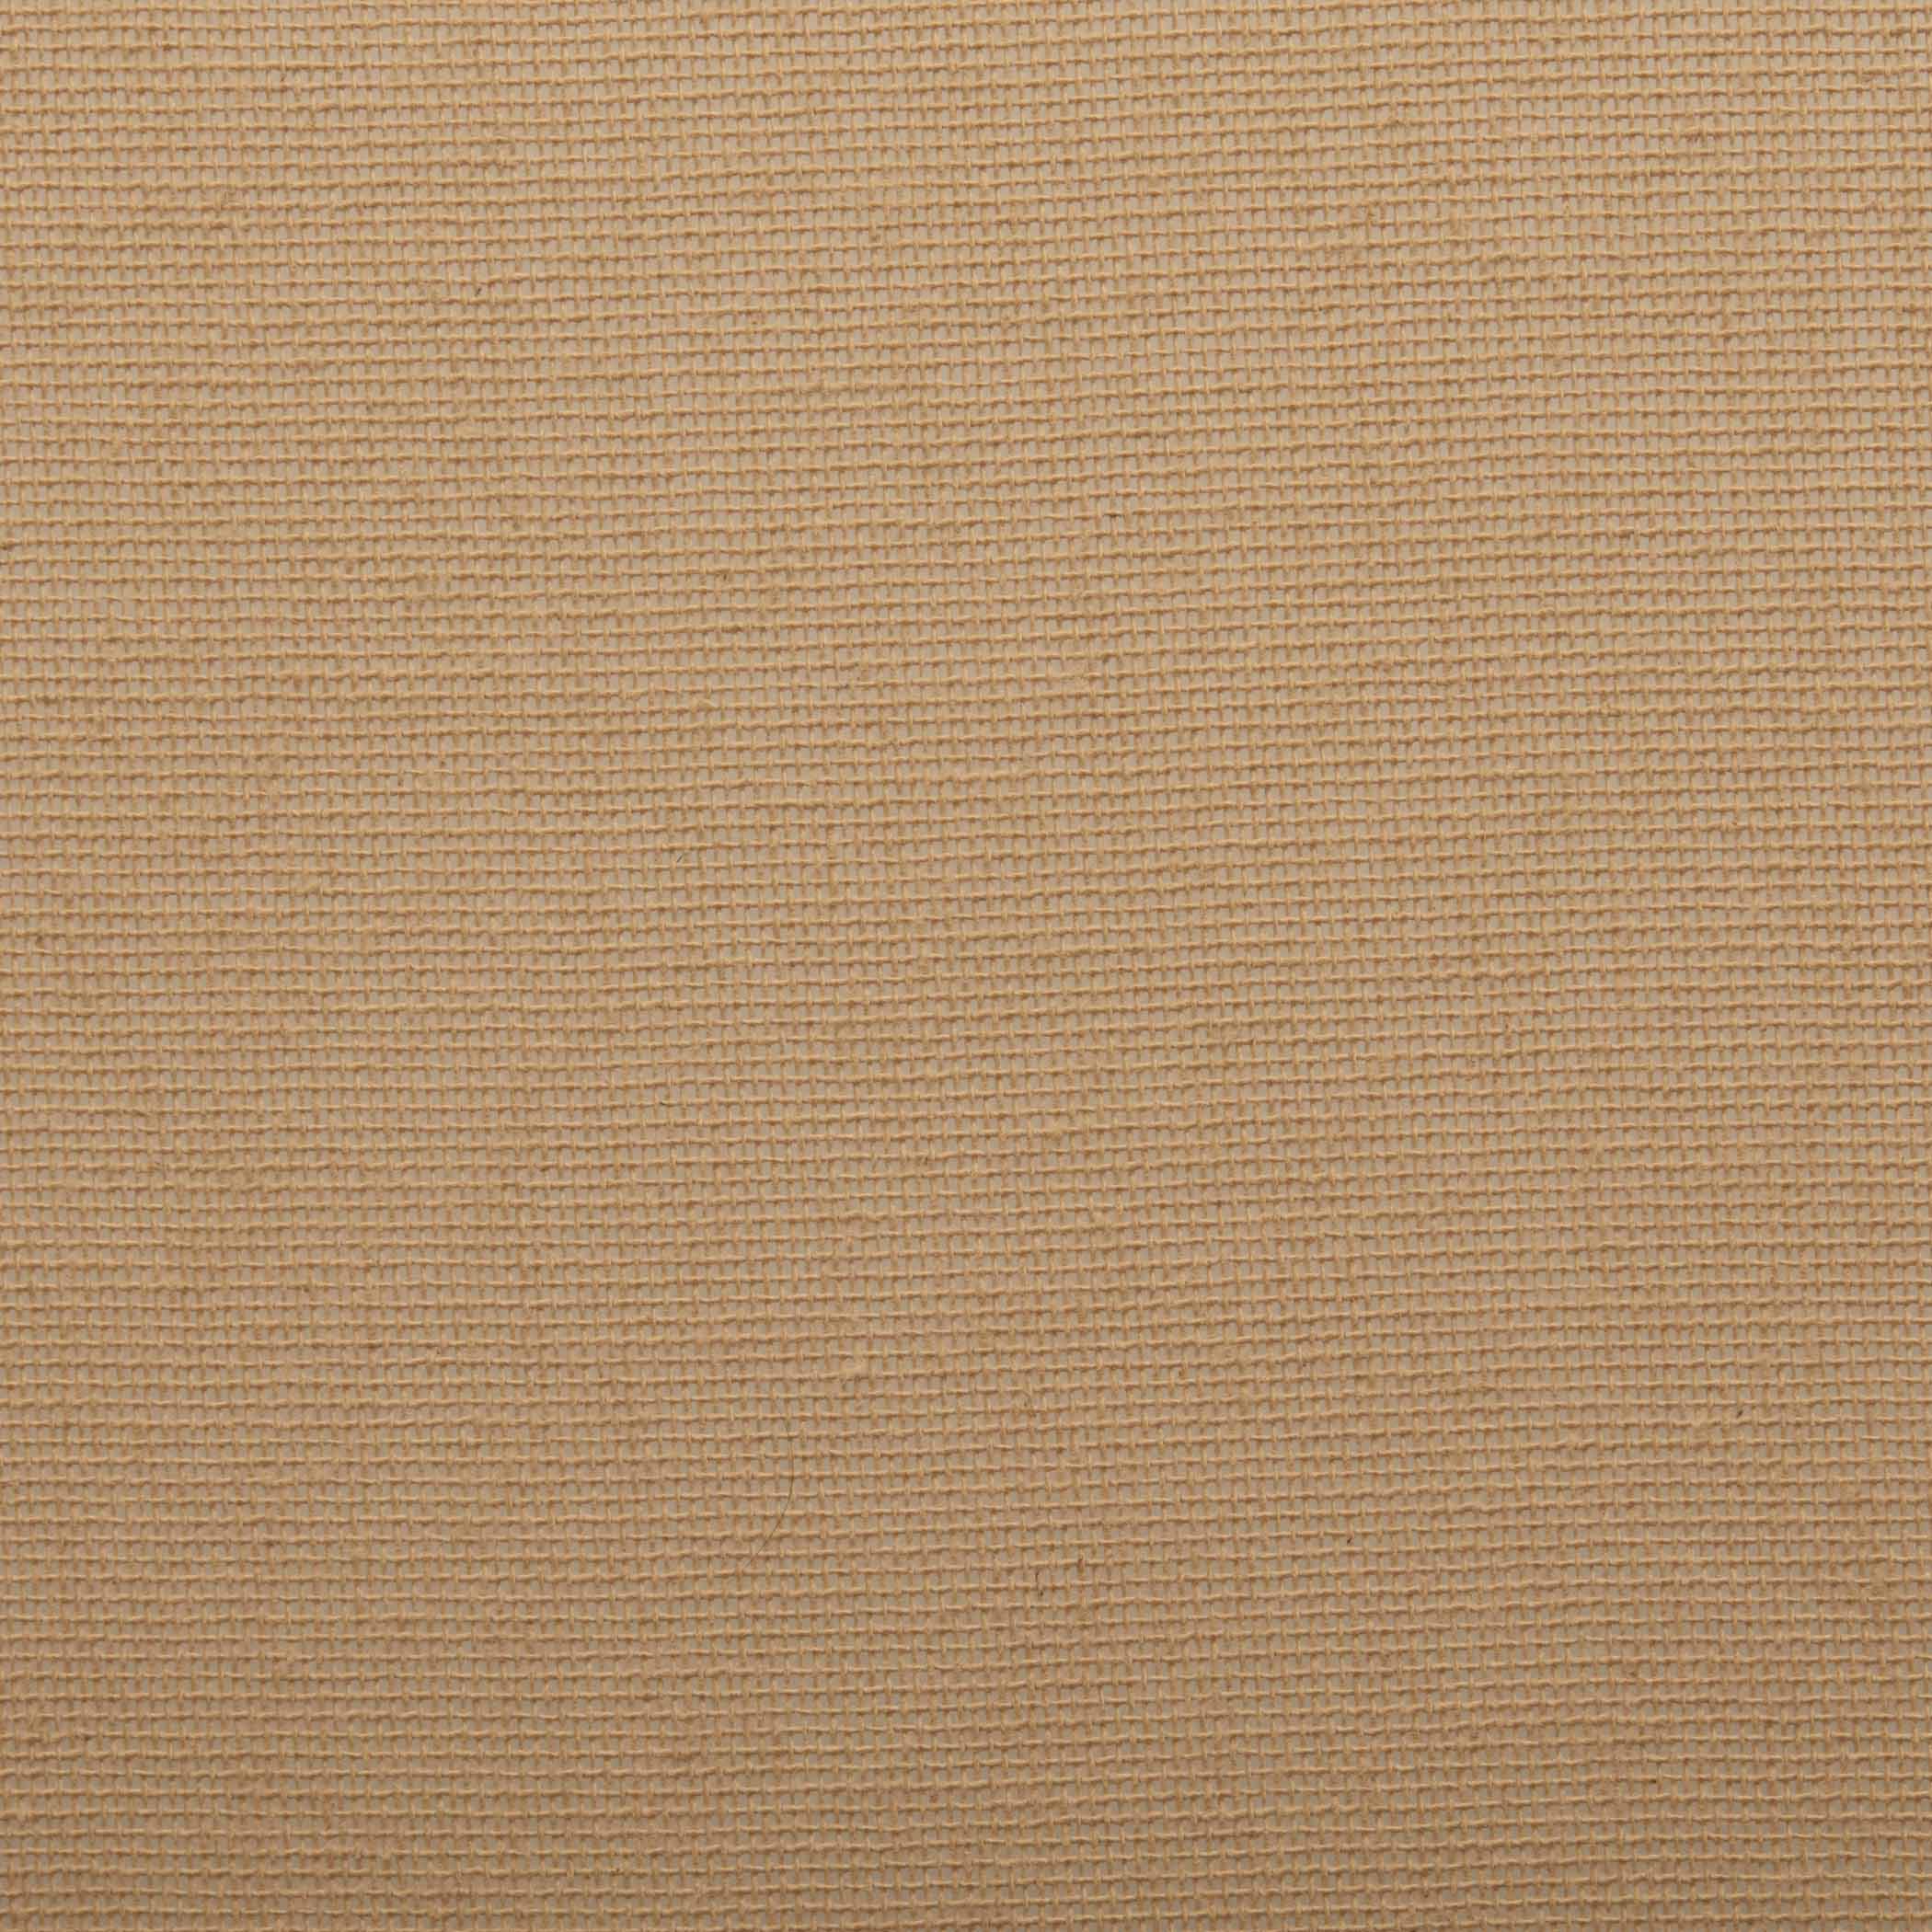 Tobacco Cloth Khaki Panel Set of 2 96x40